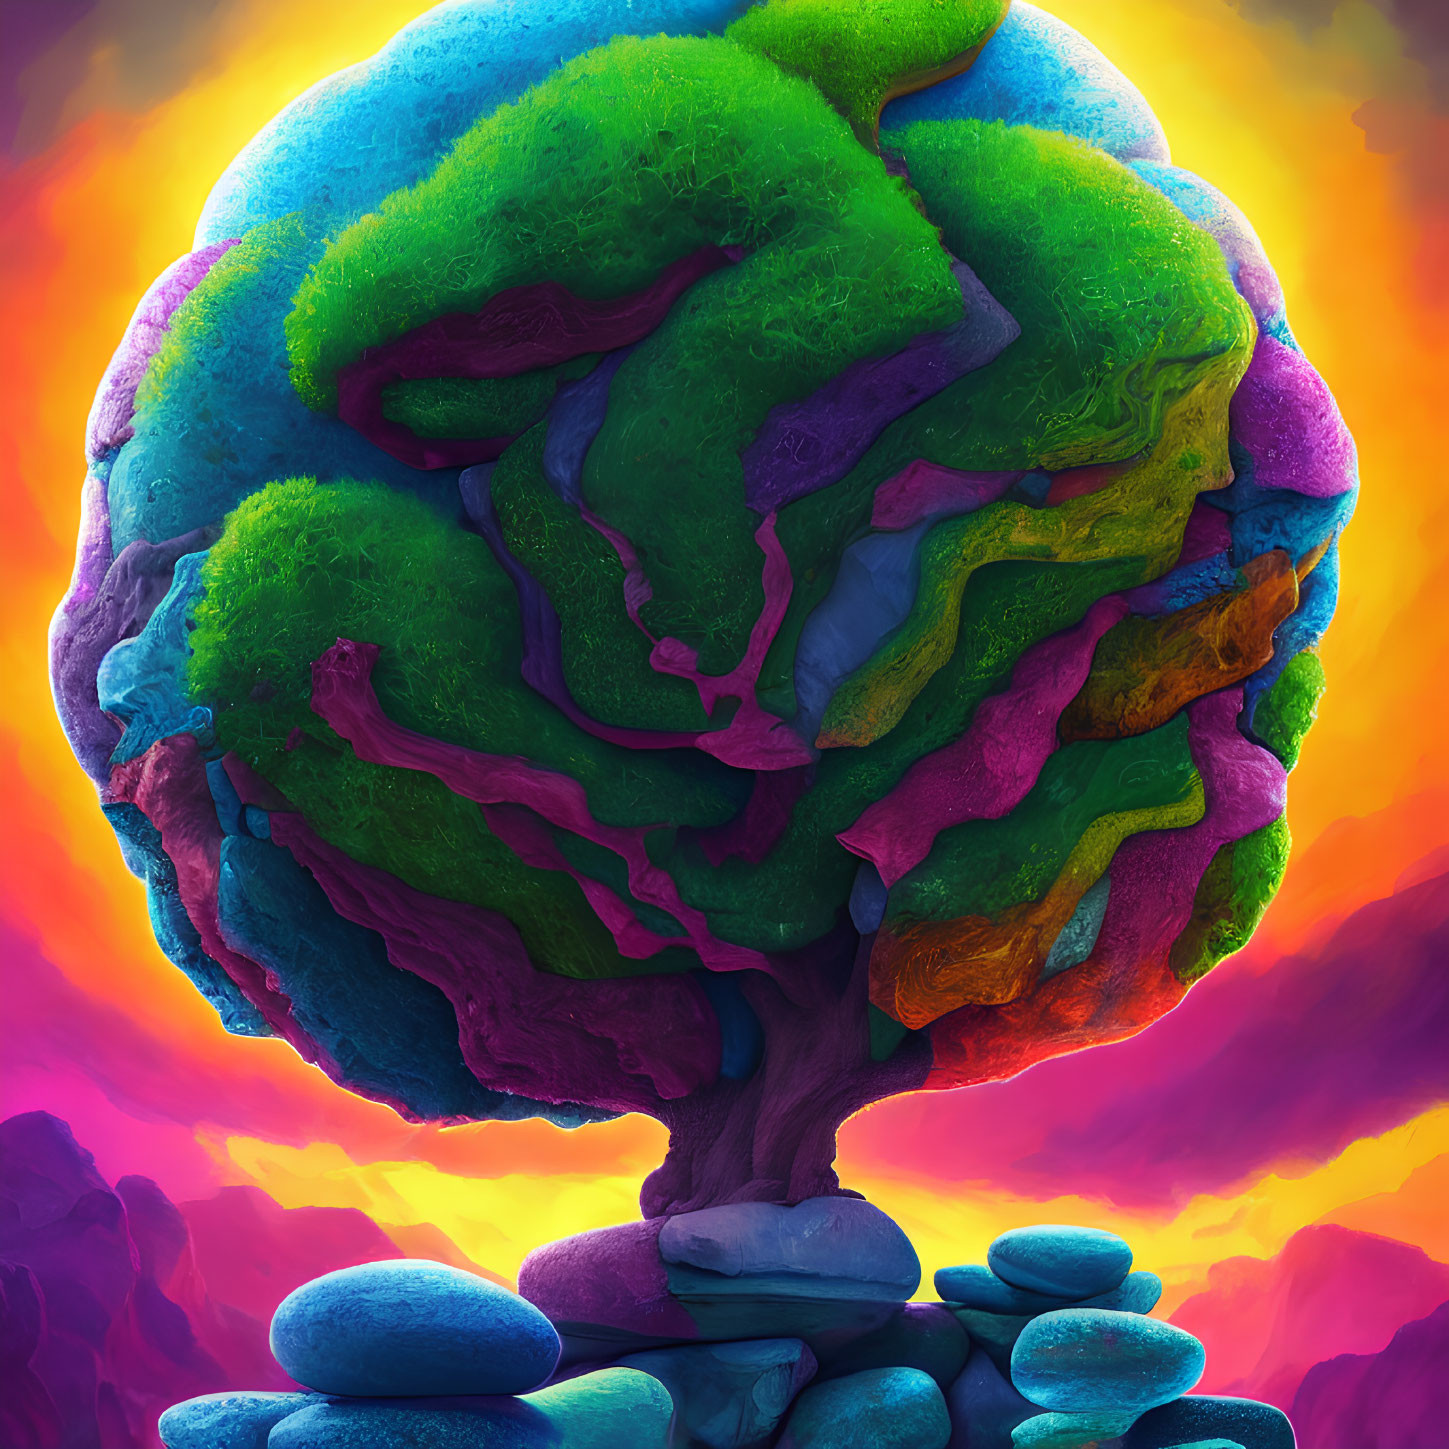 Colorful surreal artwork: Tree with brain-like foliage against vibrant sky